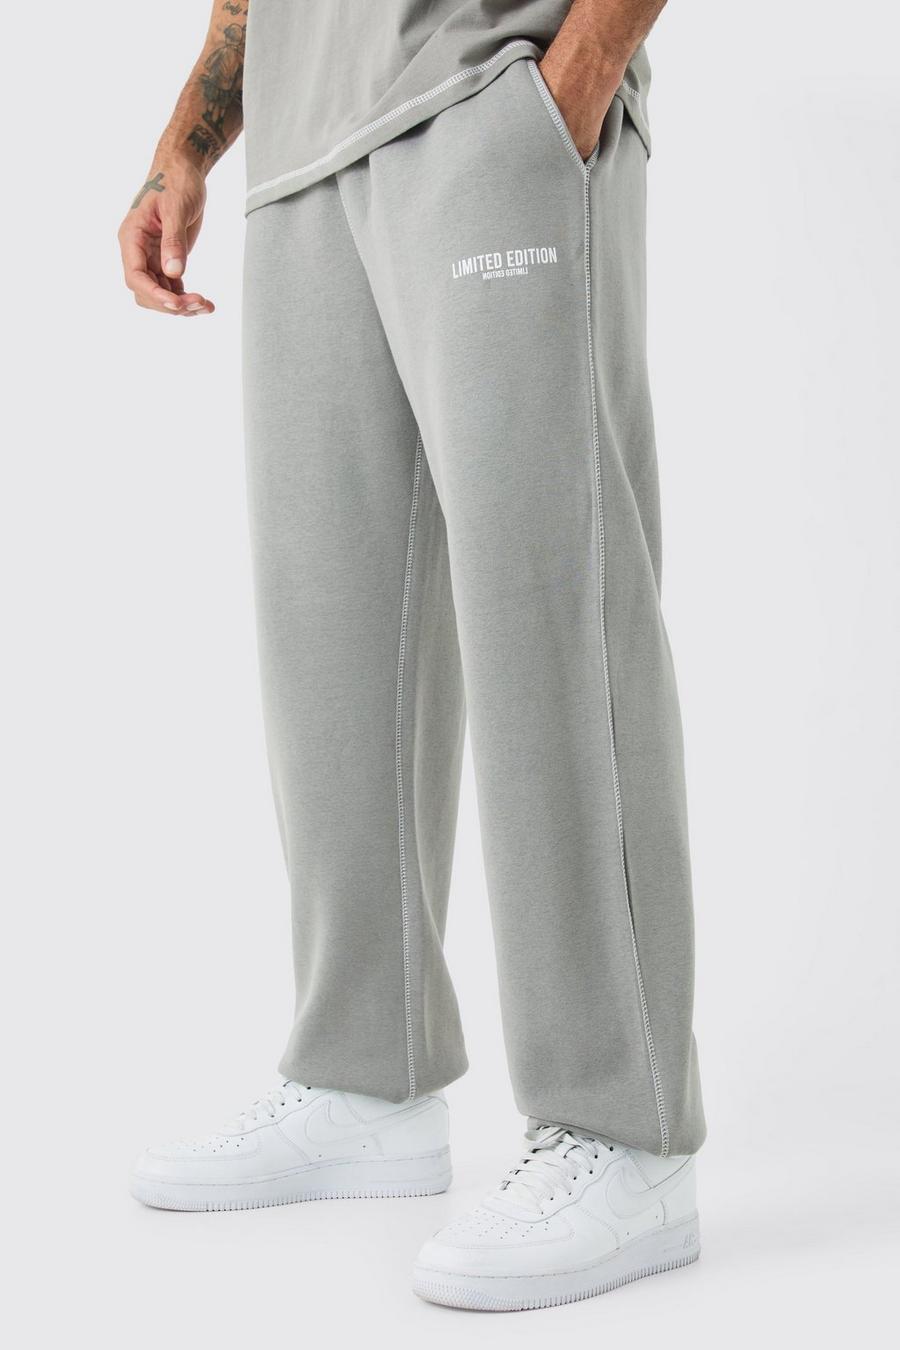 Pantaloni tuta oversize Limited Edition con cuciture a contrasto, Charcoal